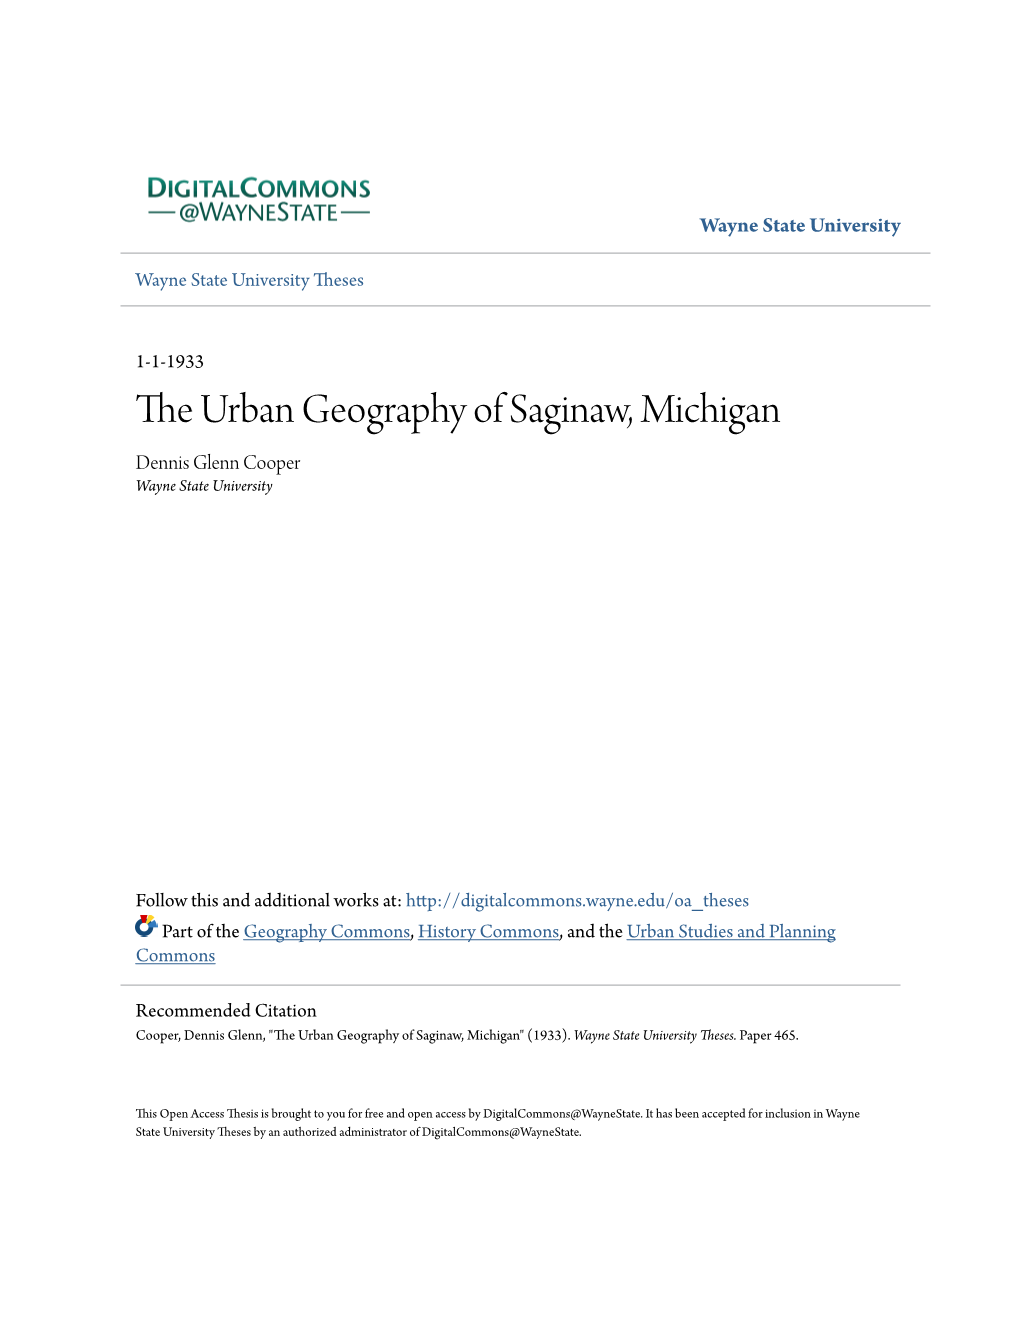 The Urban Geography of Saginaw, Michigan